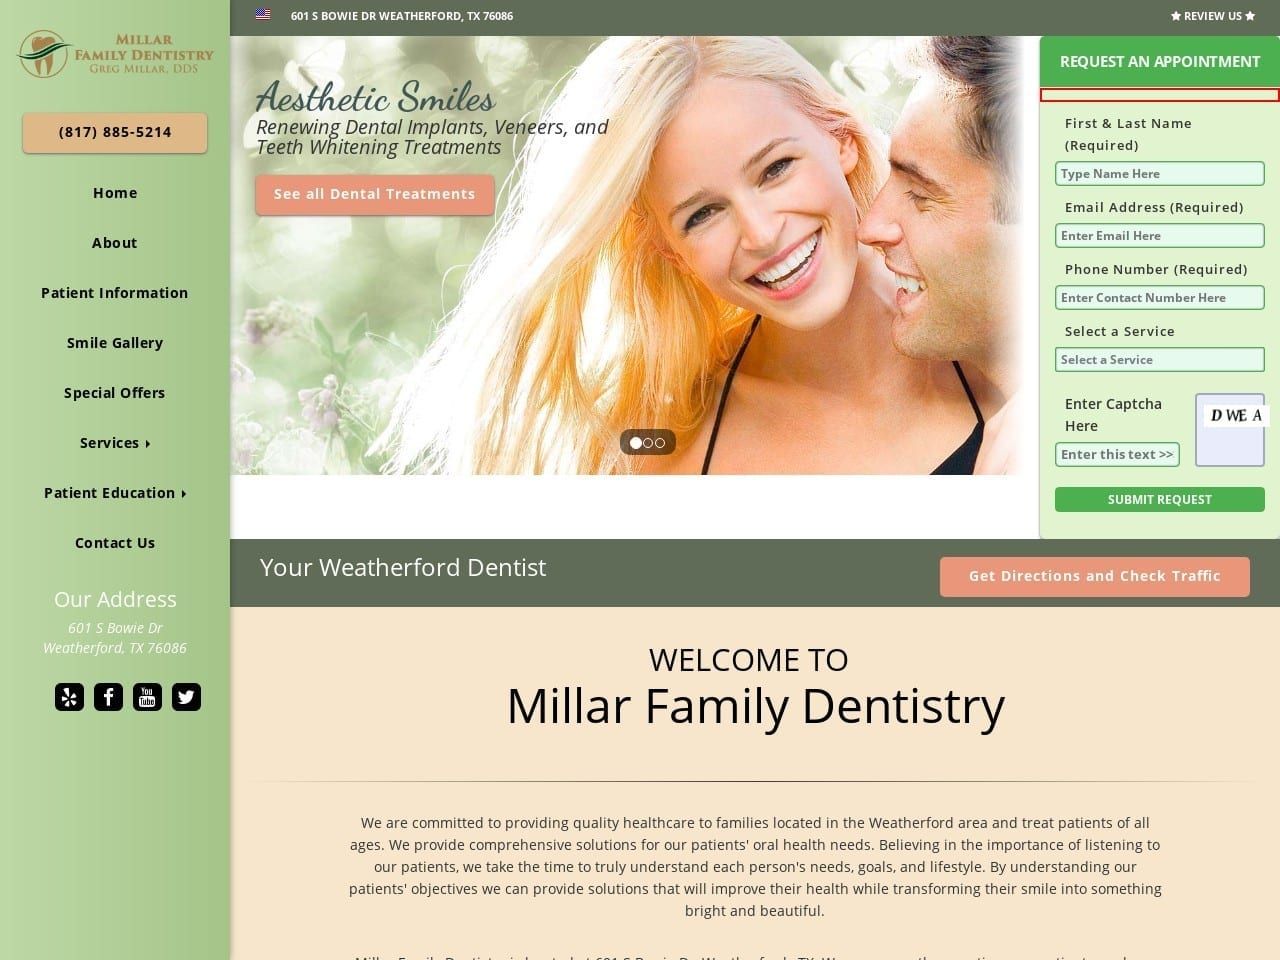 Bowie Drive Dental Care Website Screenshot from bowiedrivedentalcare.com